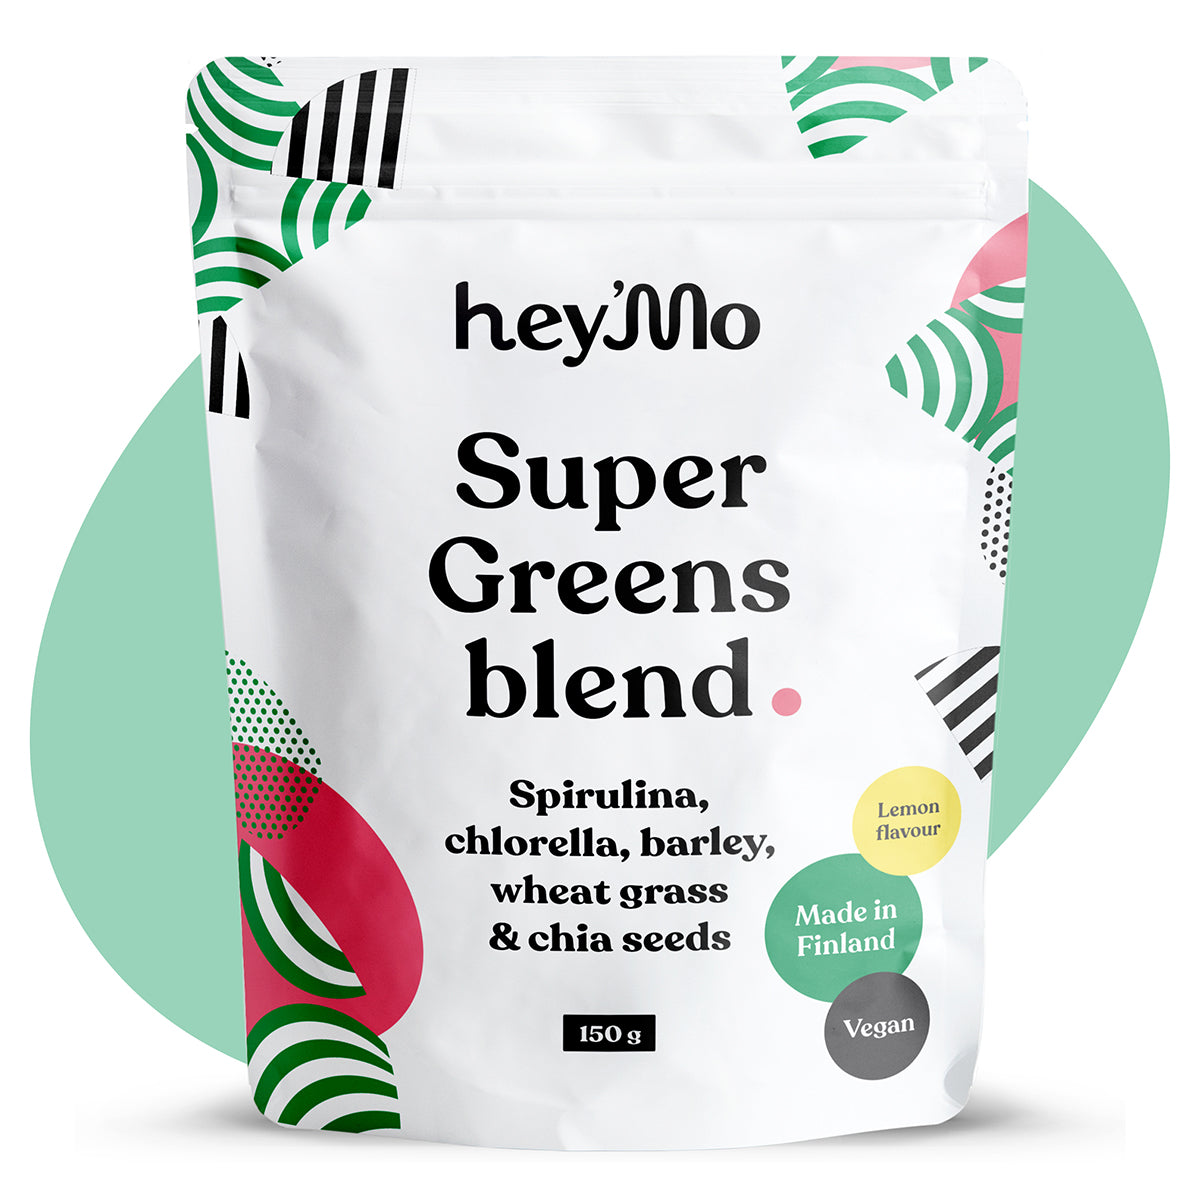 Super Greens blend